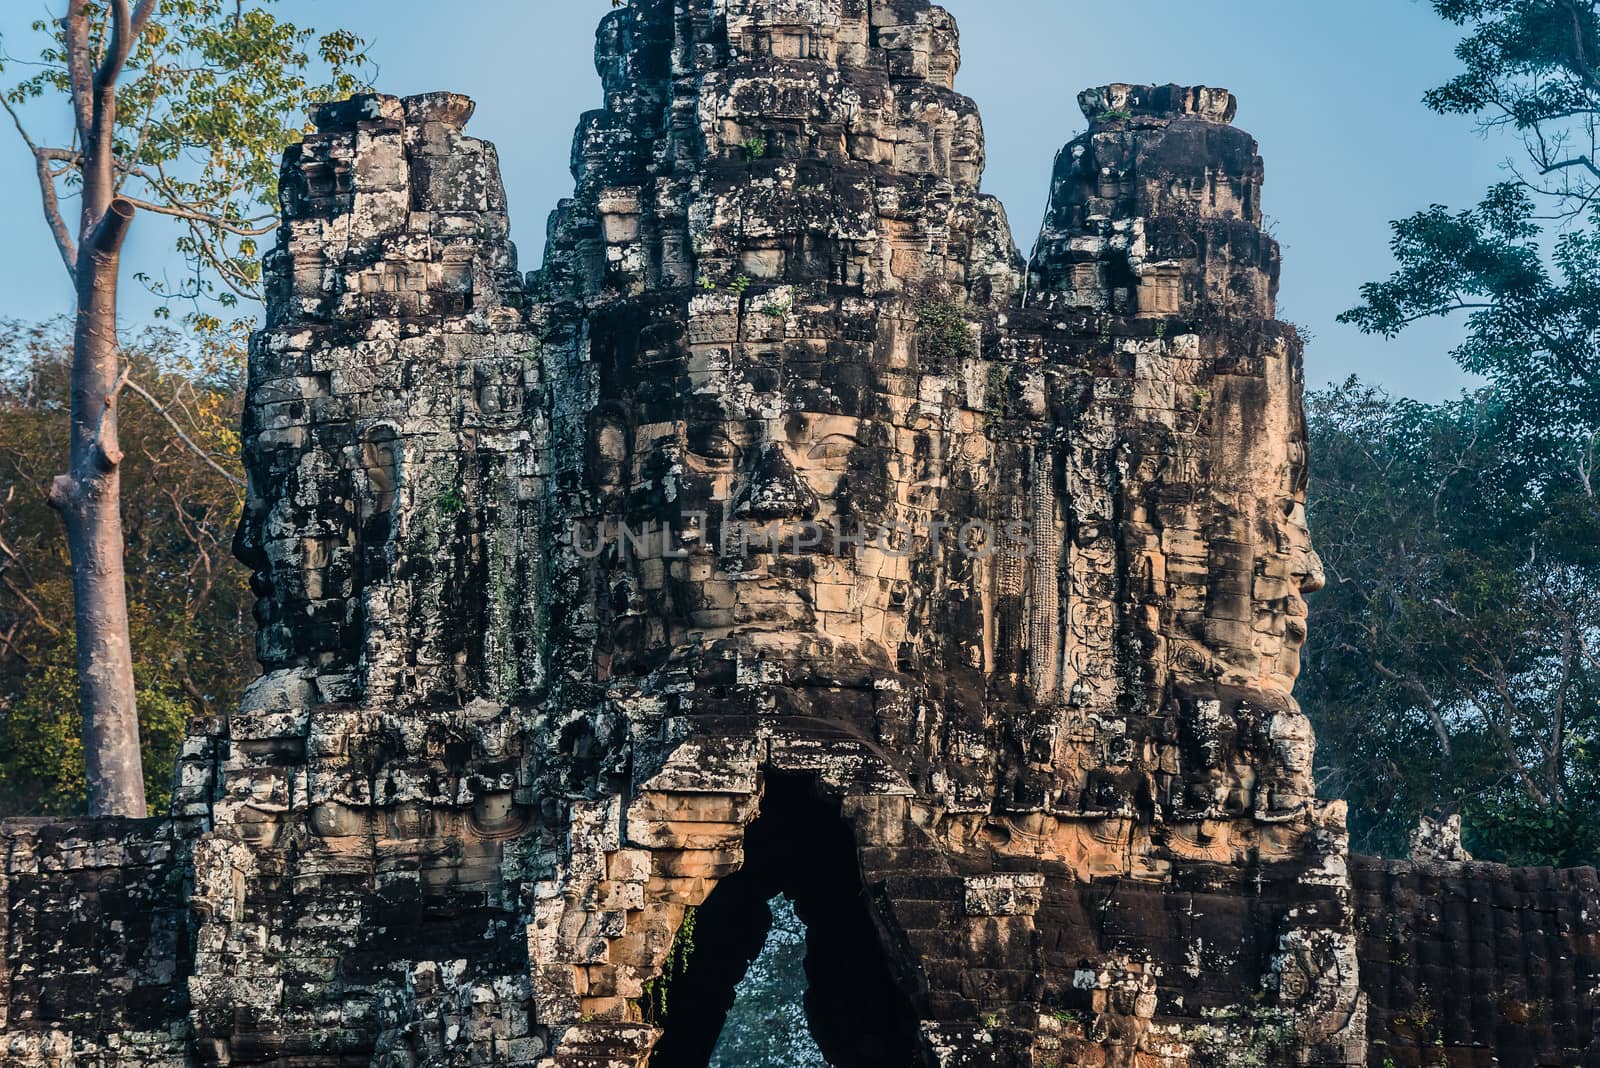 giant face south gate bridge angkor thom cambodia